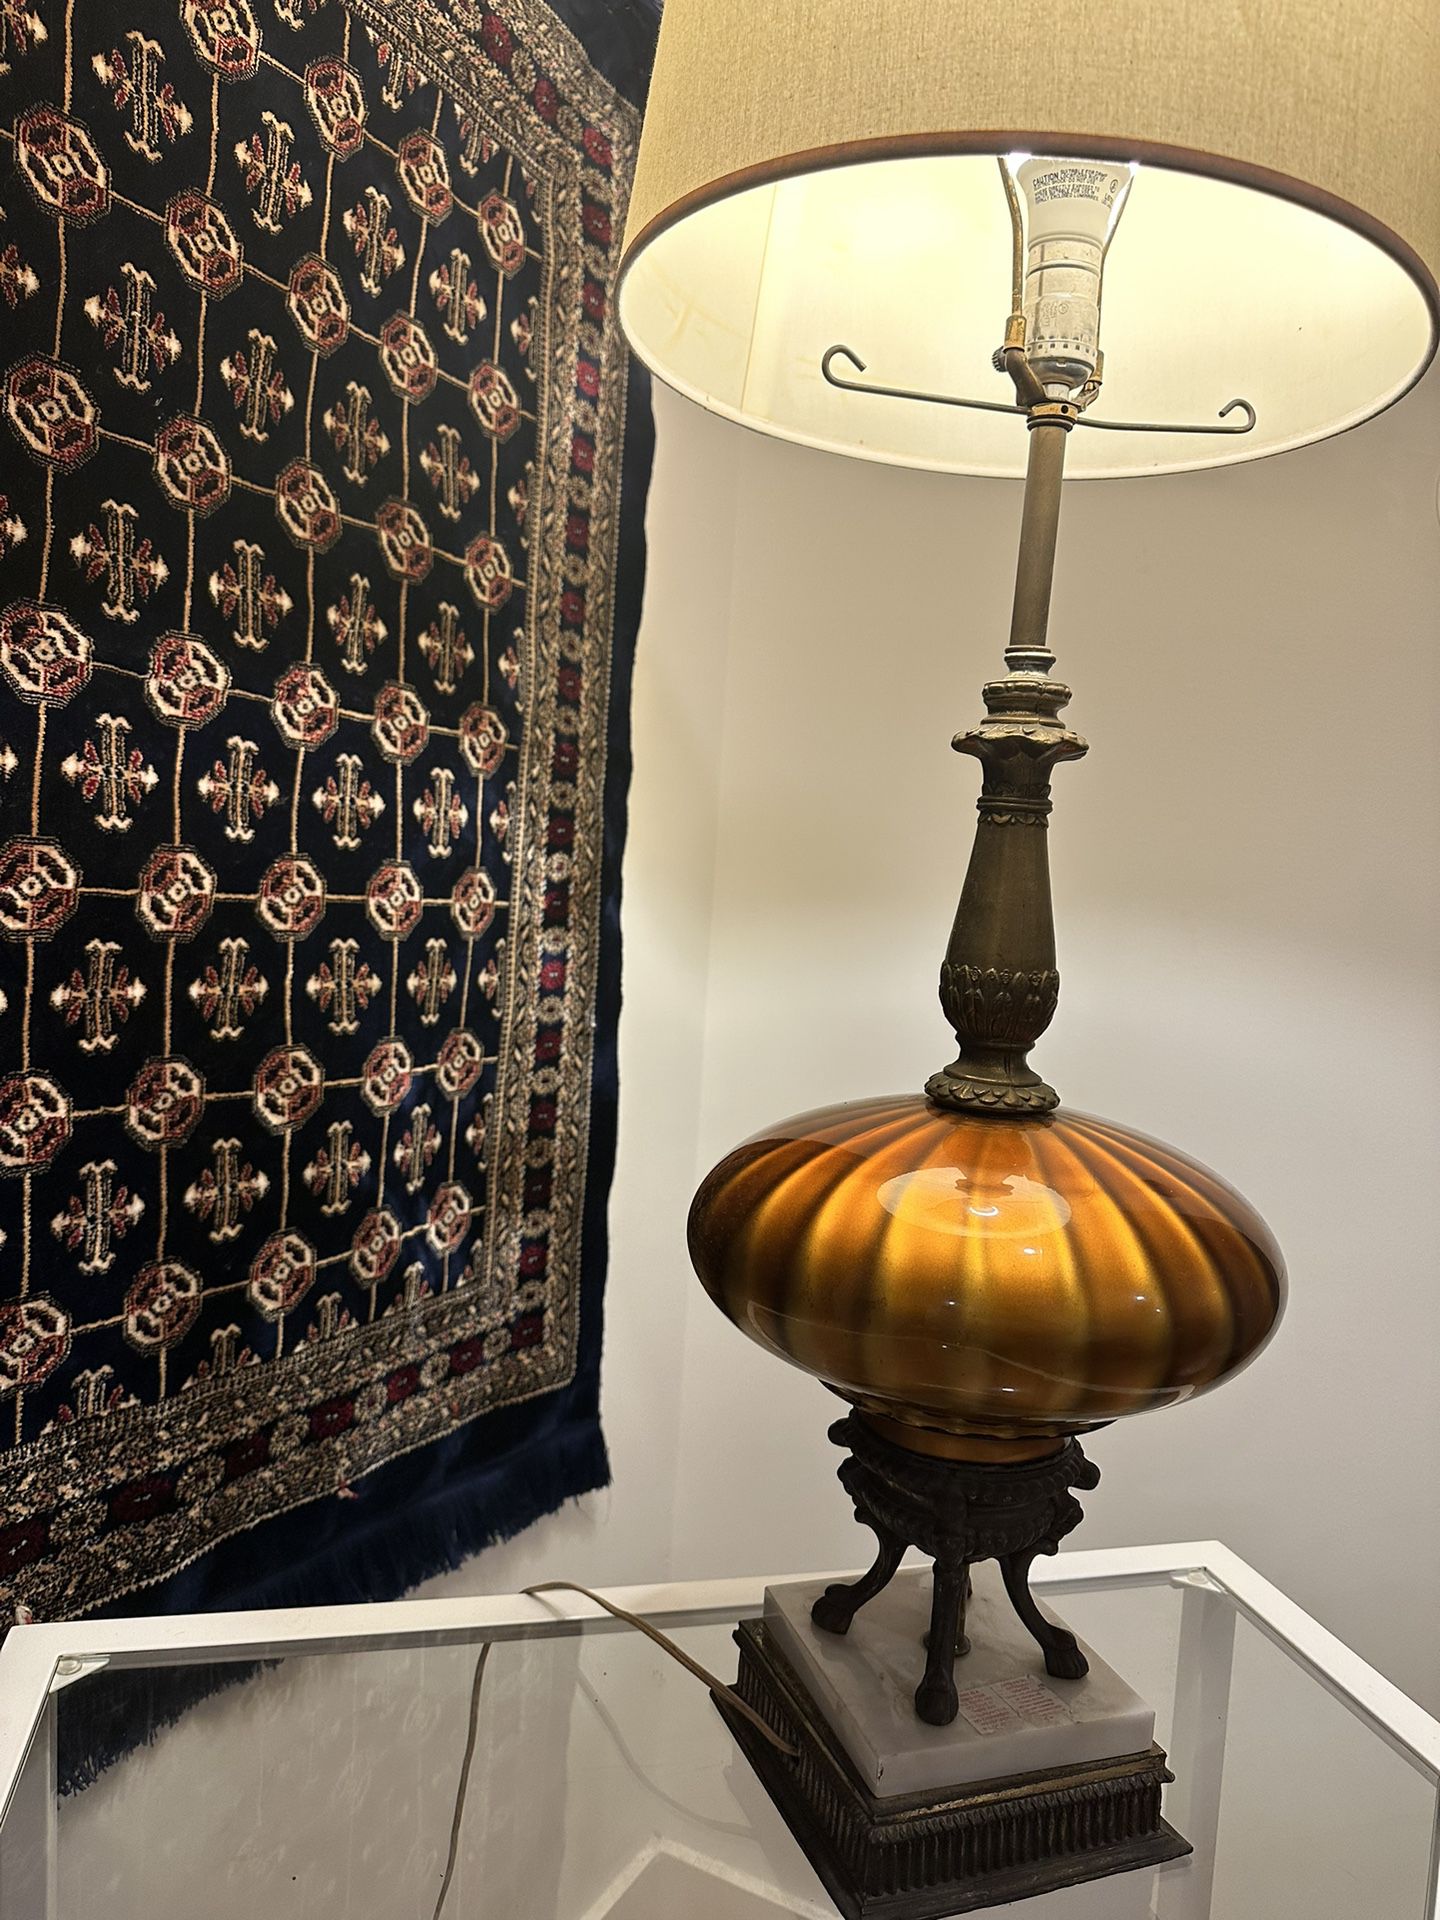 Decorative Vintage style lamp